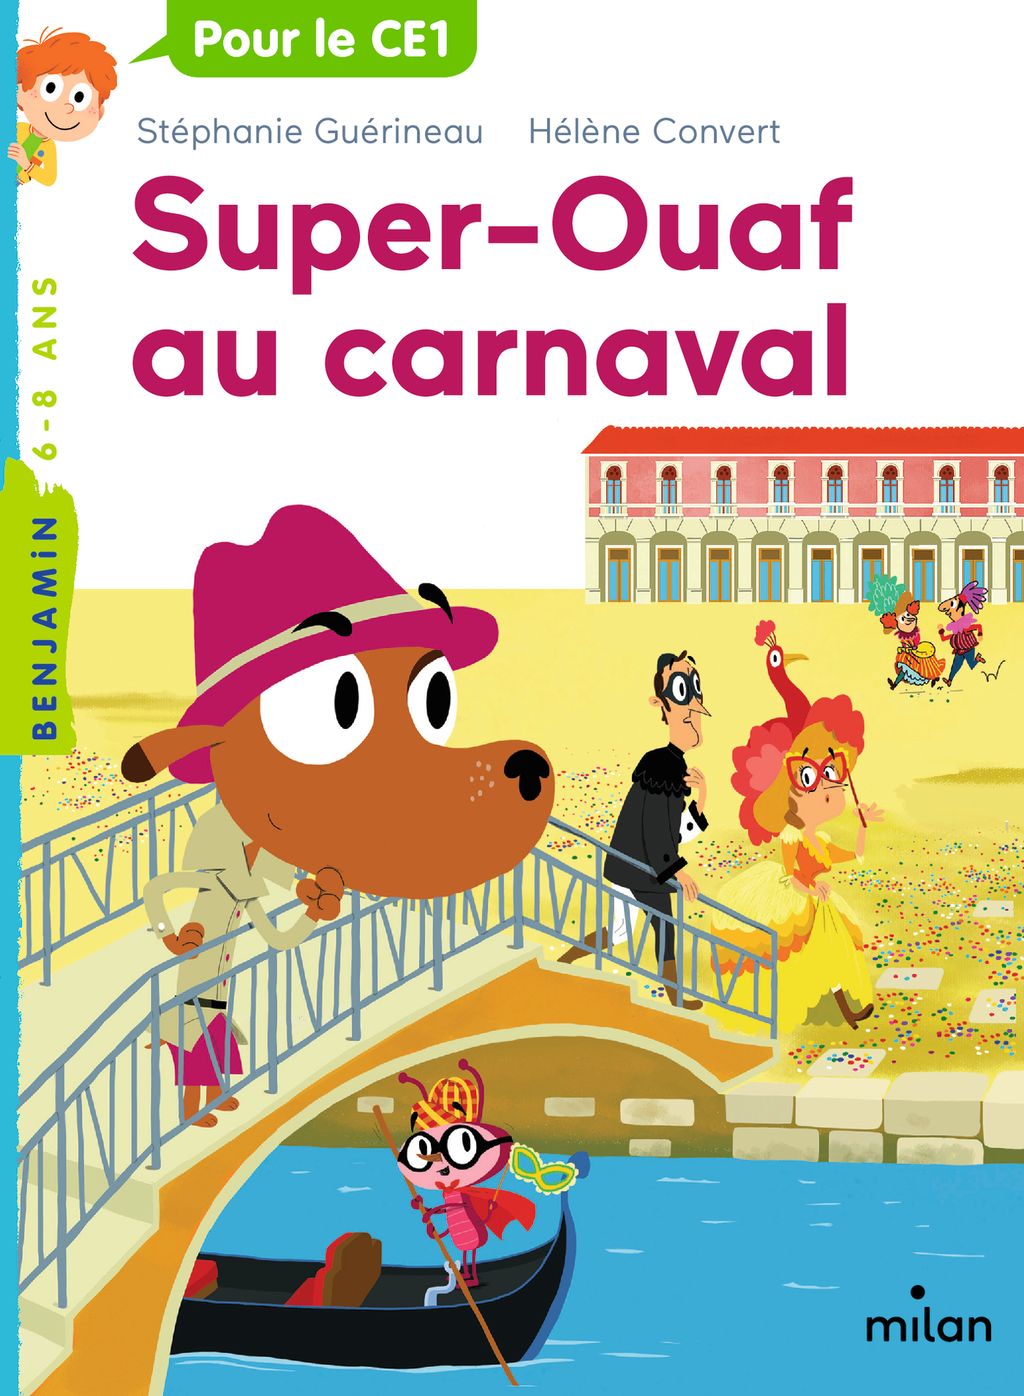 « Super-Ouaf au carnaval » cover